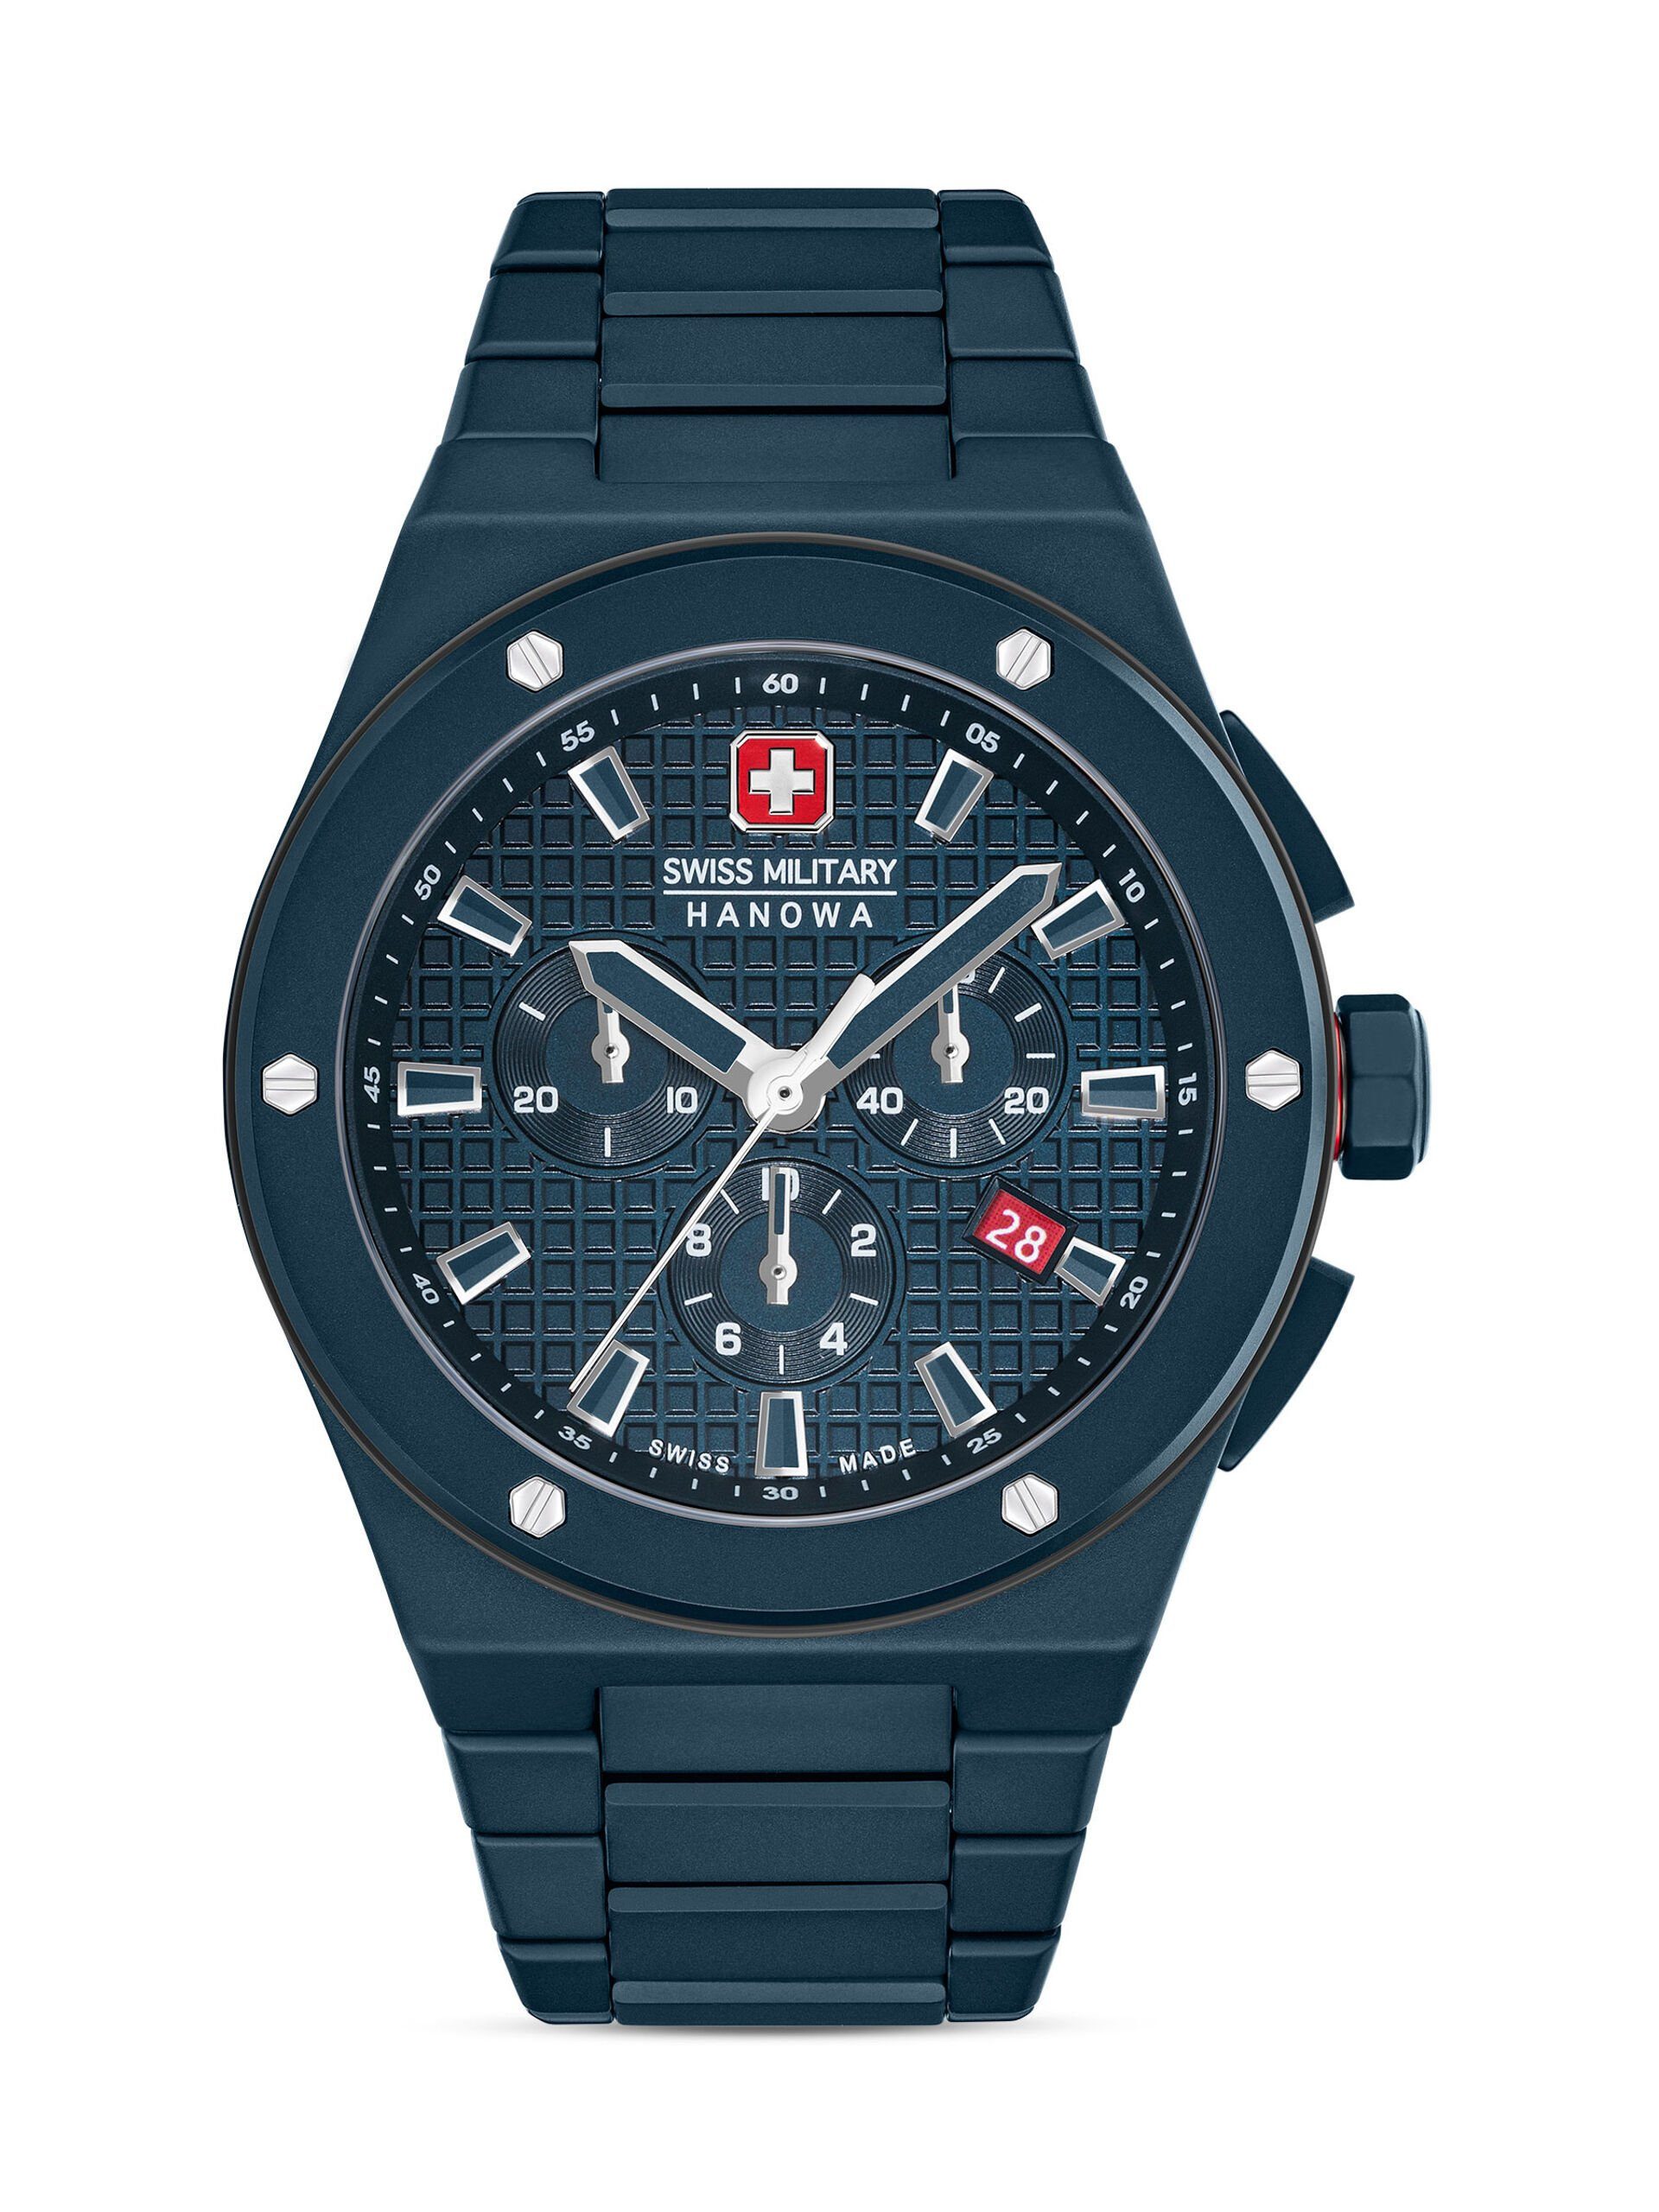 Swiss SIDEWINDER Military Hanowa CERAMIC-Armband Blau CERAMIC, hochwertigem Quarzuhr mit